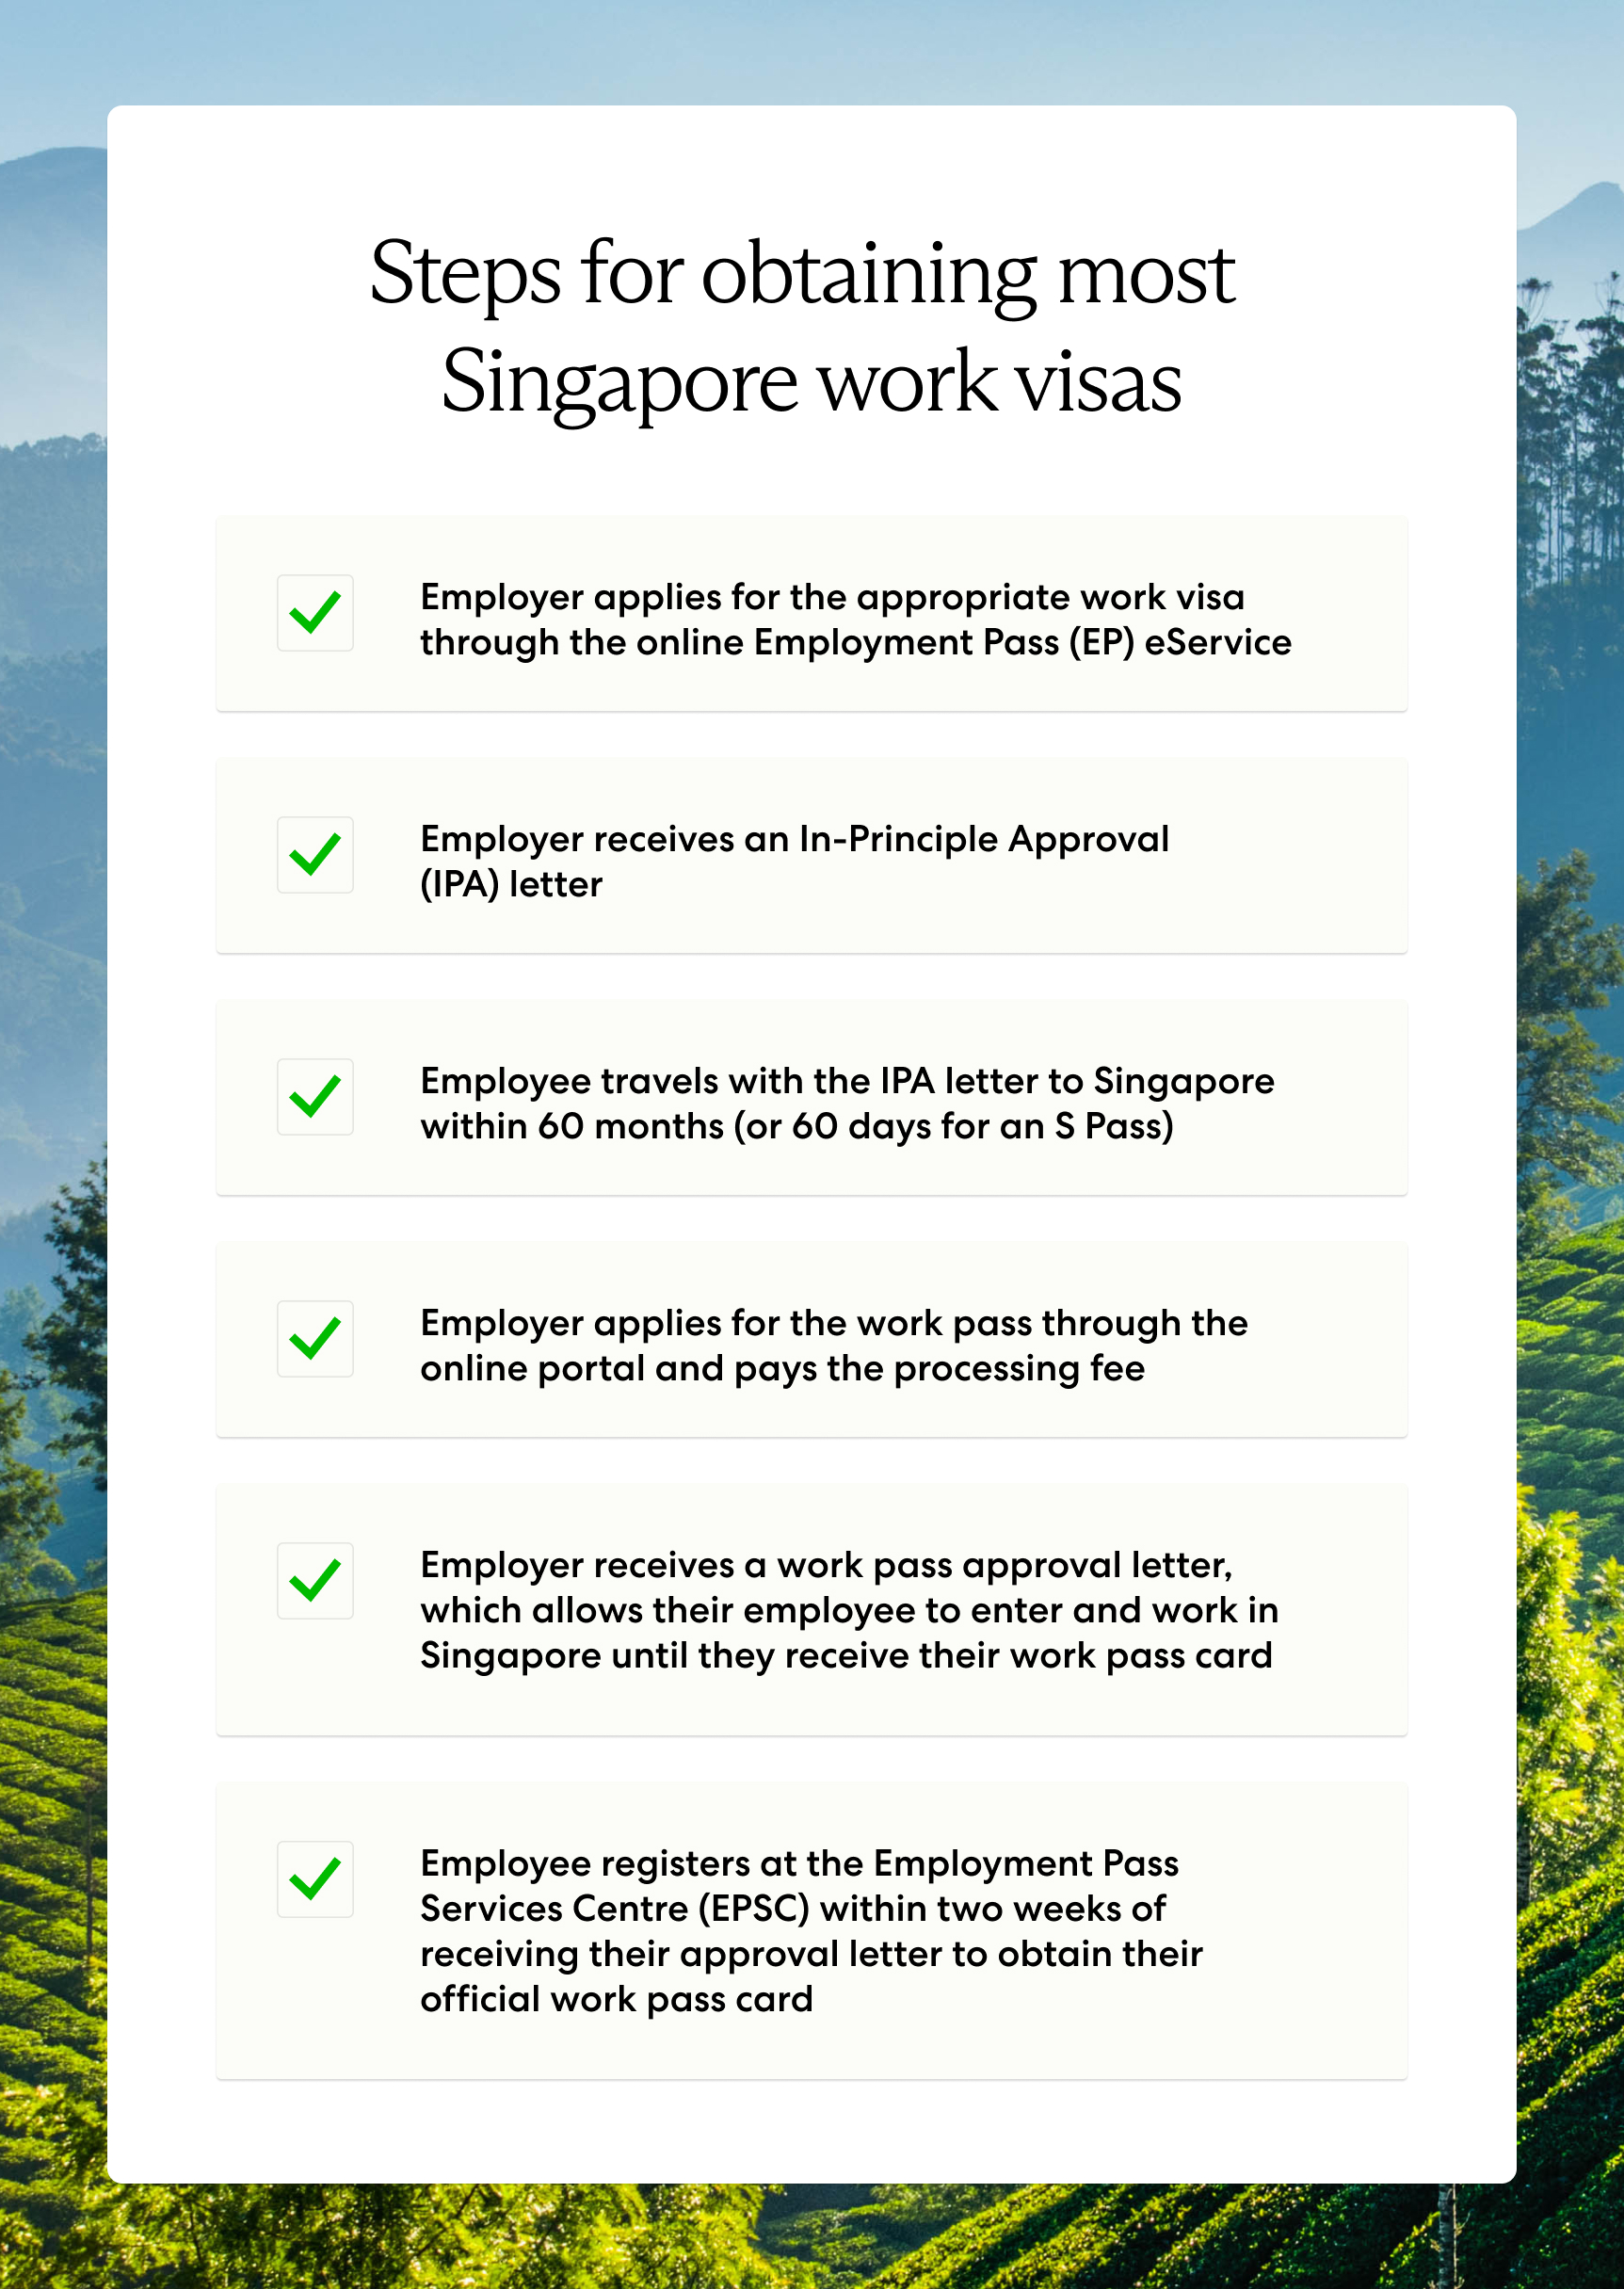 List of key steps for obtaining a Singapore work visa